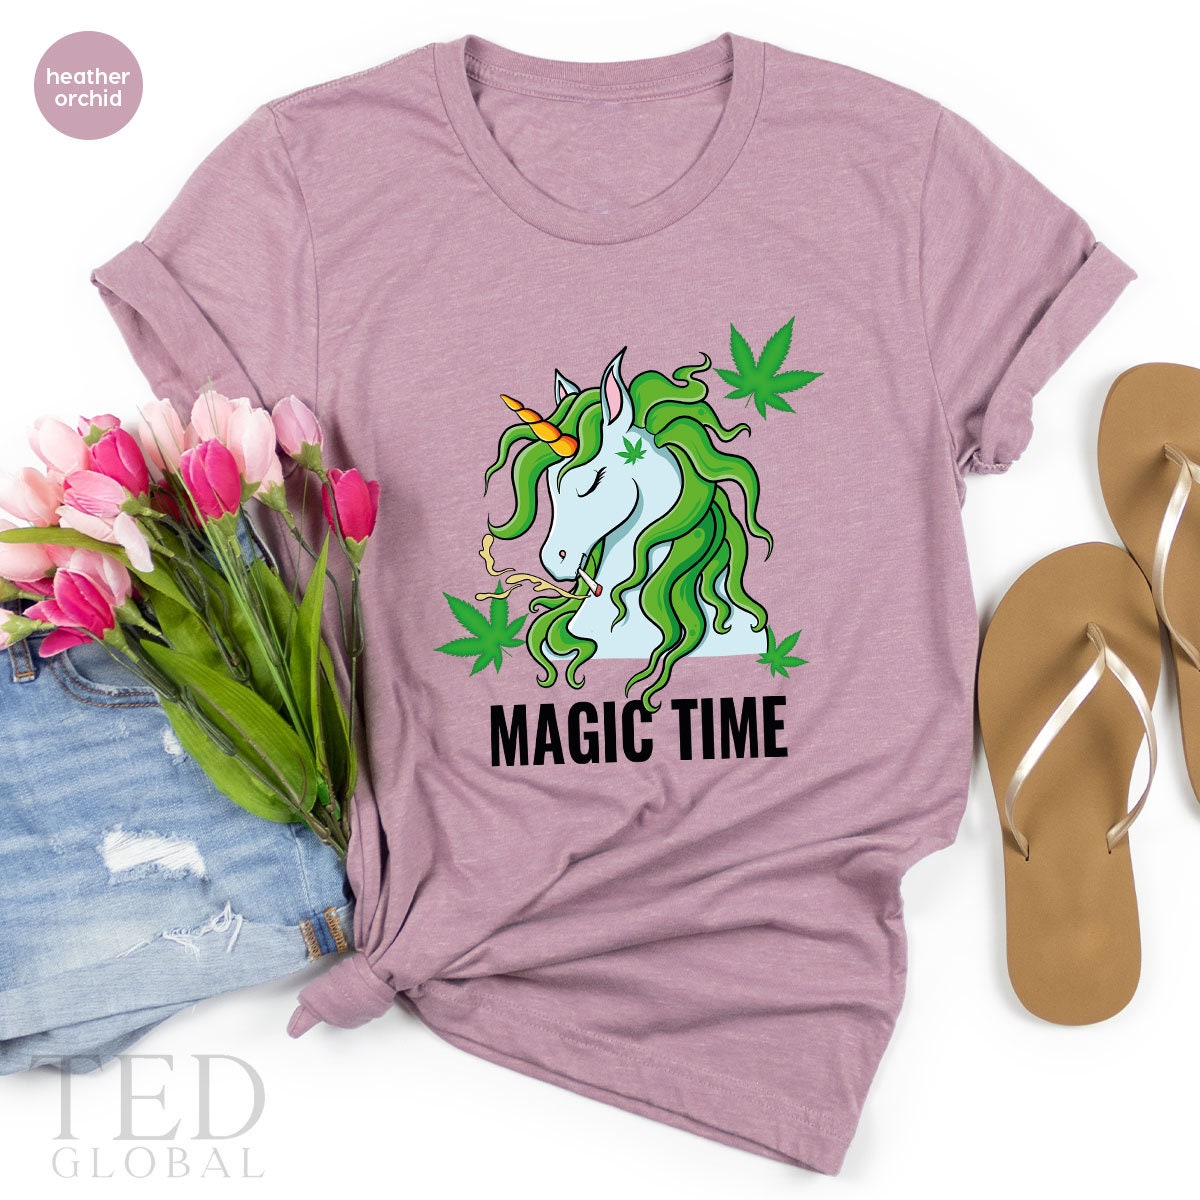 Magic Time Shirt, Funny Weed T Shirt, Cute Unicorn T Shirt, Weed Lover Shirts, Smoking Tee, Cannabis T-Shirt, Marijuana Gift For Christmas - Fastdeliverytees.com